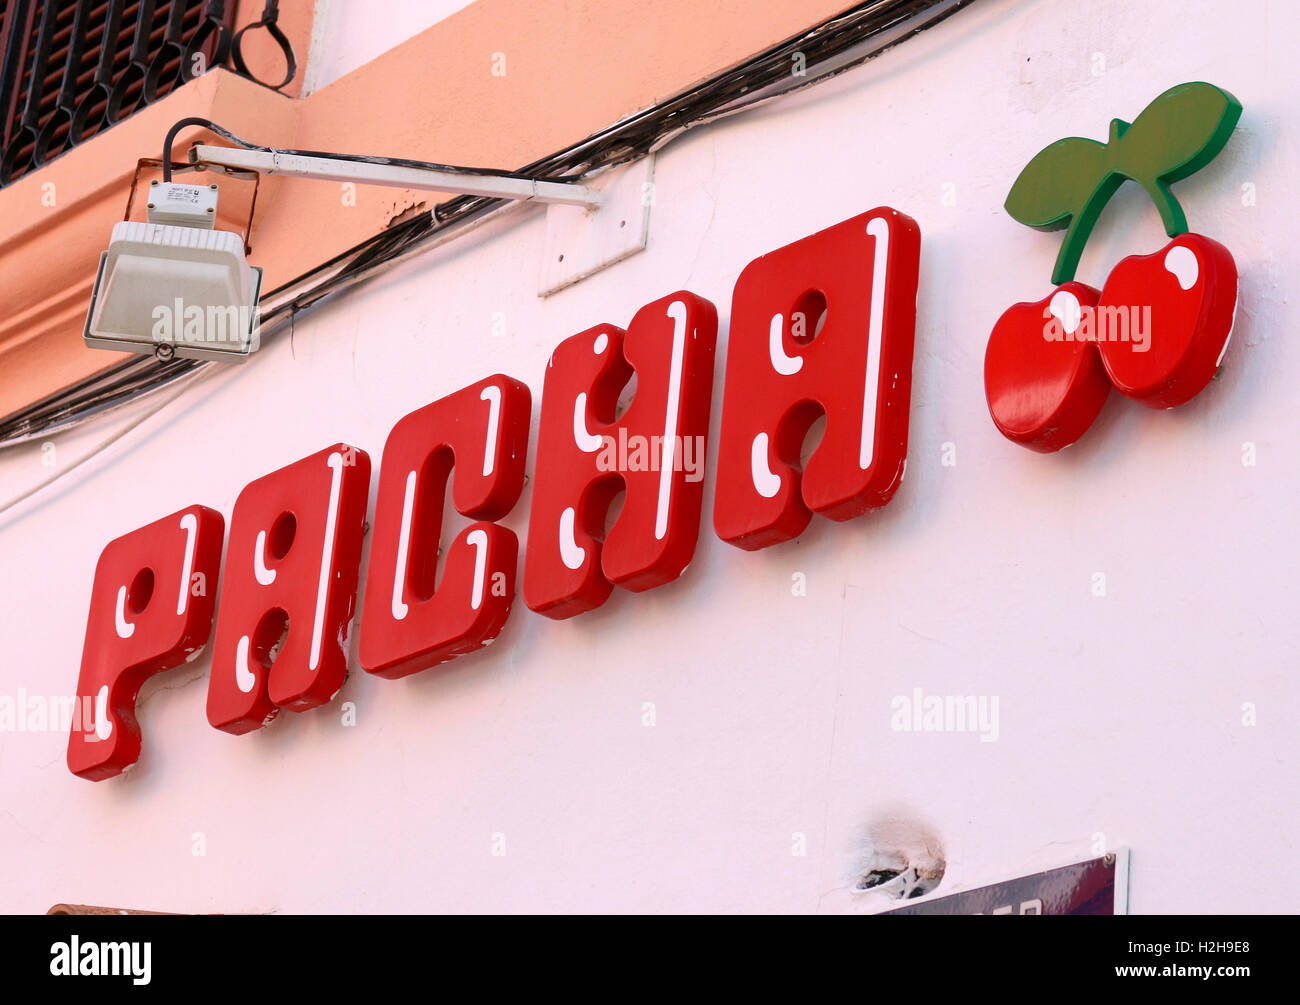 Das Logo der Marke "Pacha", Ibiza, Spanien Stockfotografie - Alamy